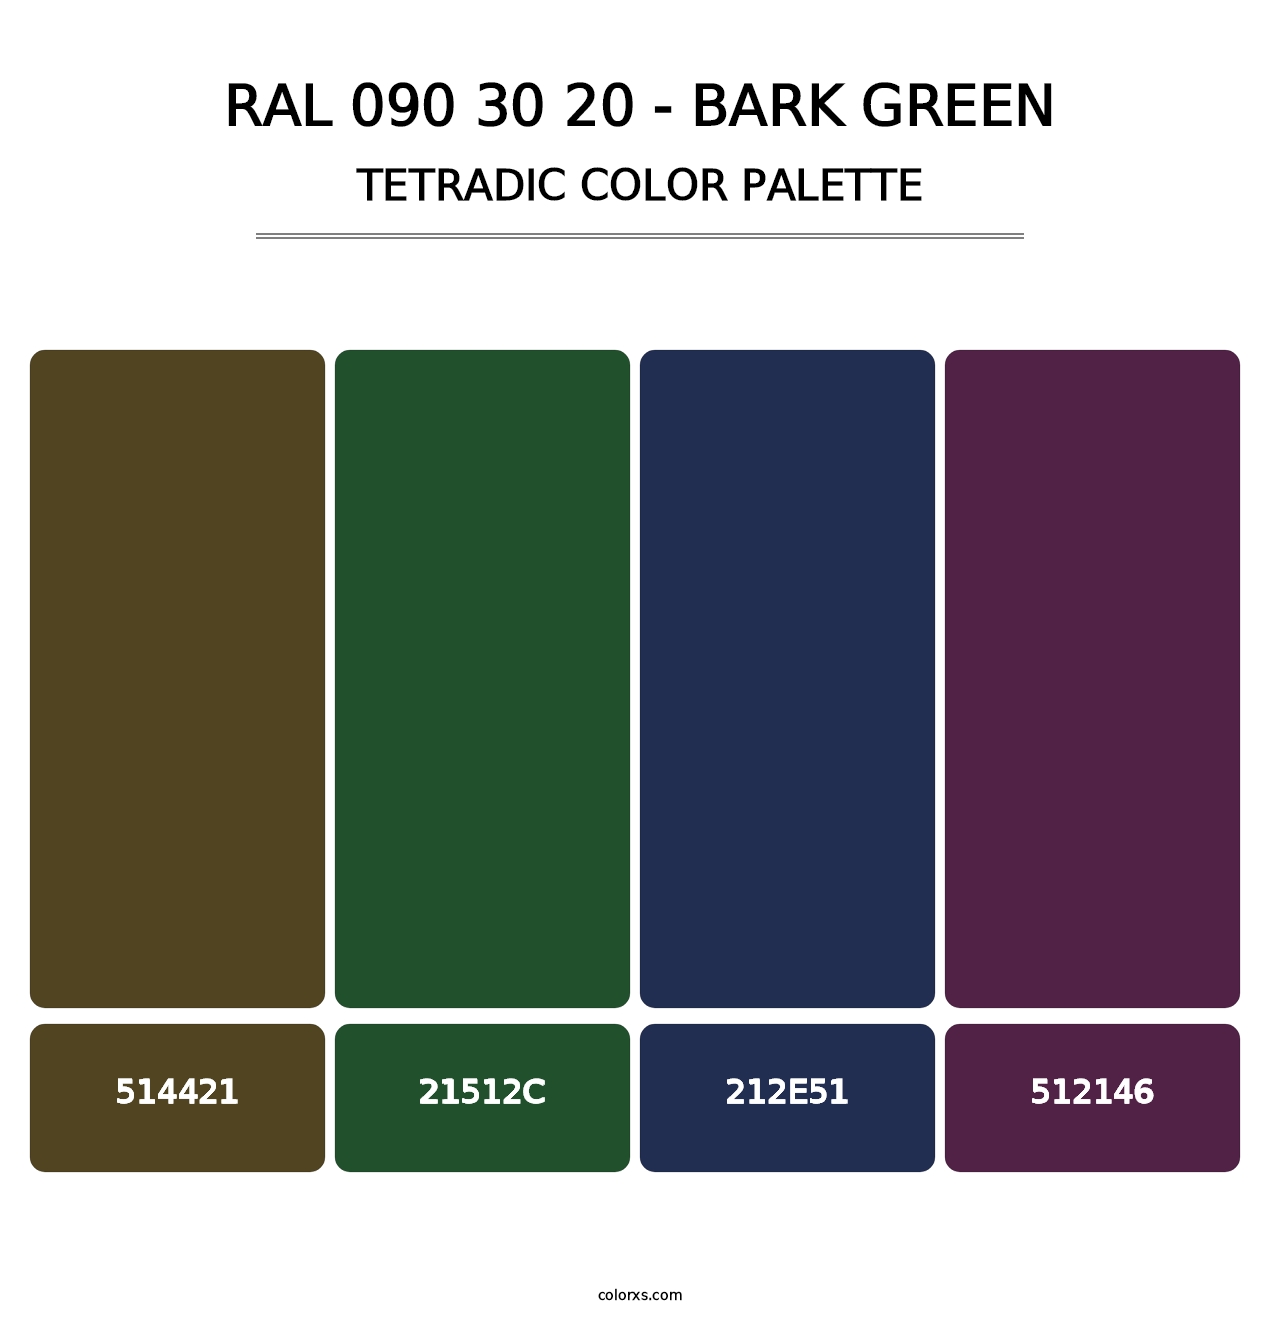 RAL 090 30 20 - Bark Green - Tetradic Color Palette